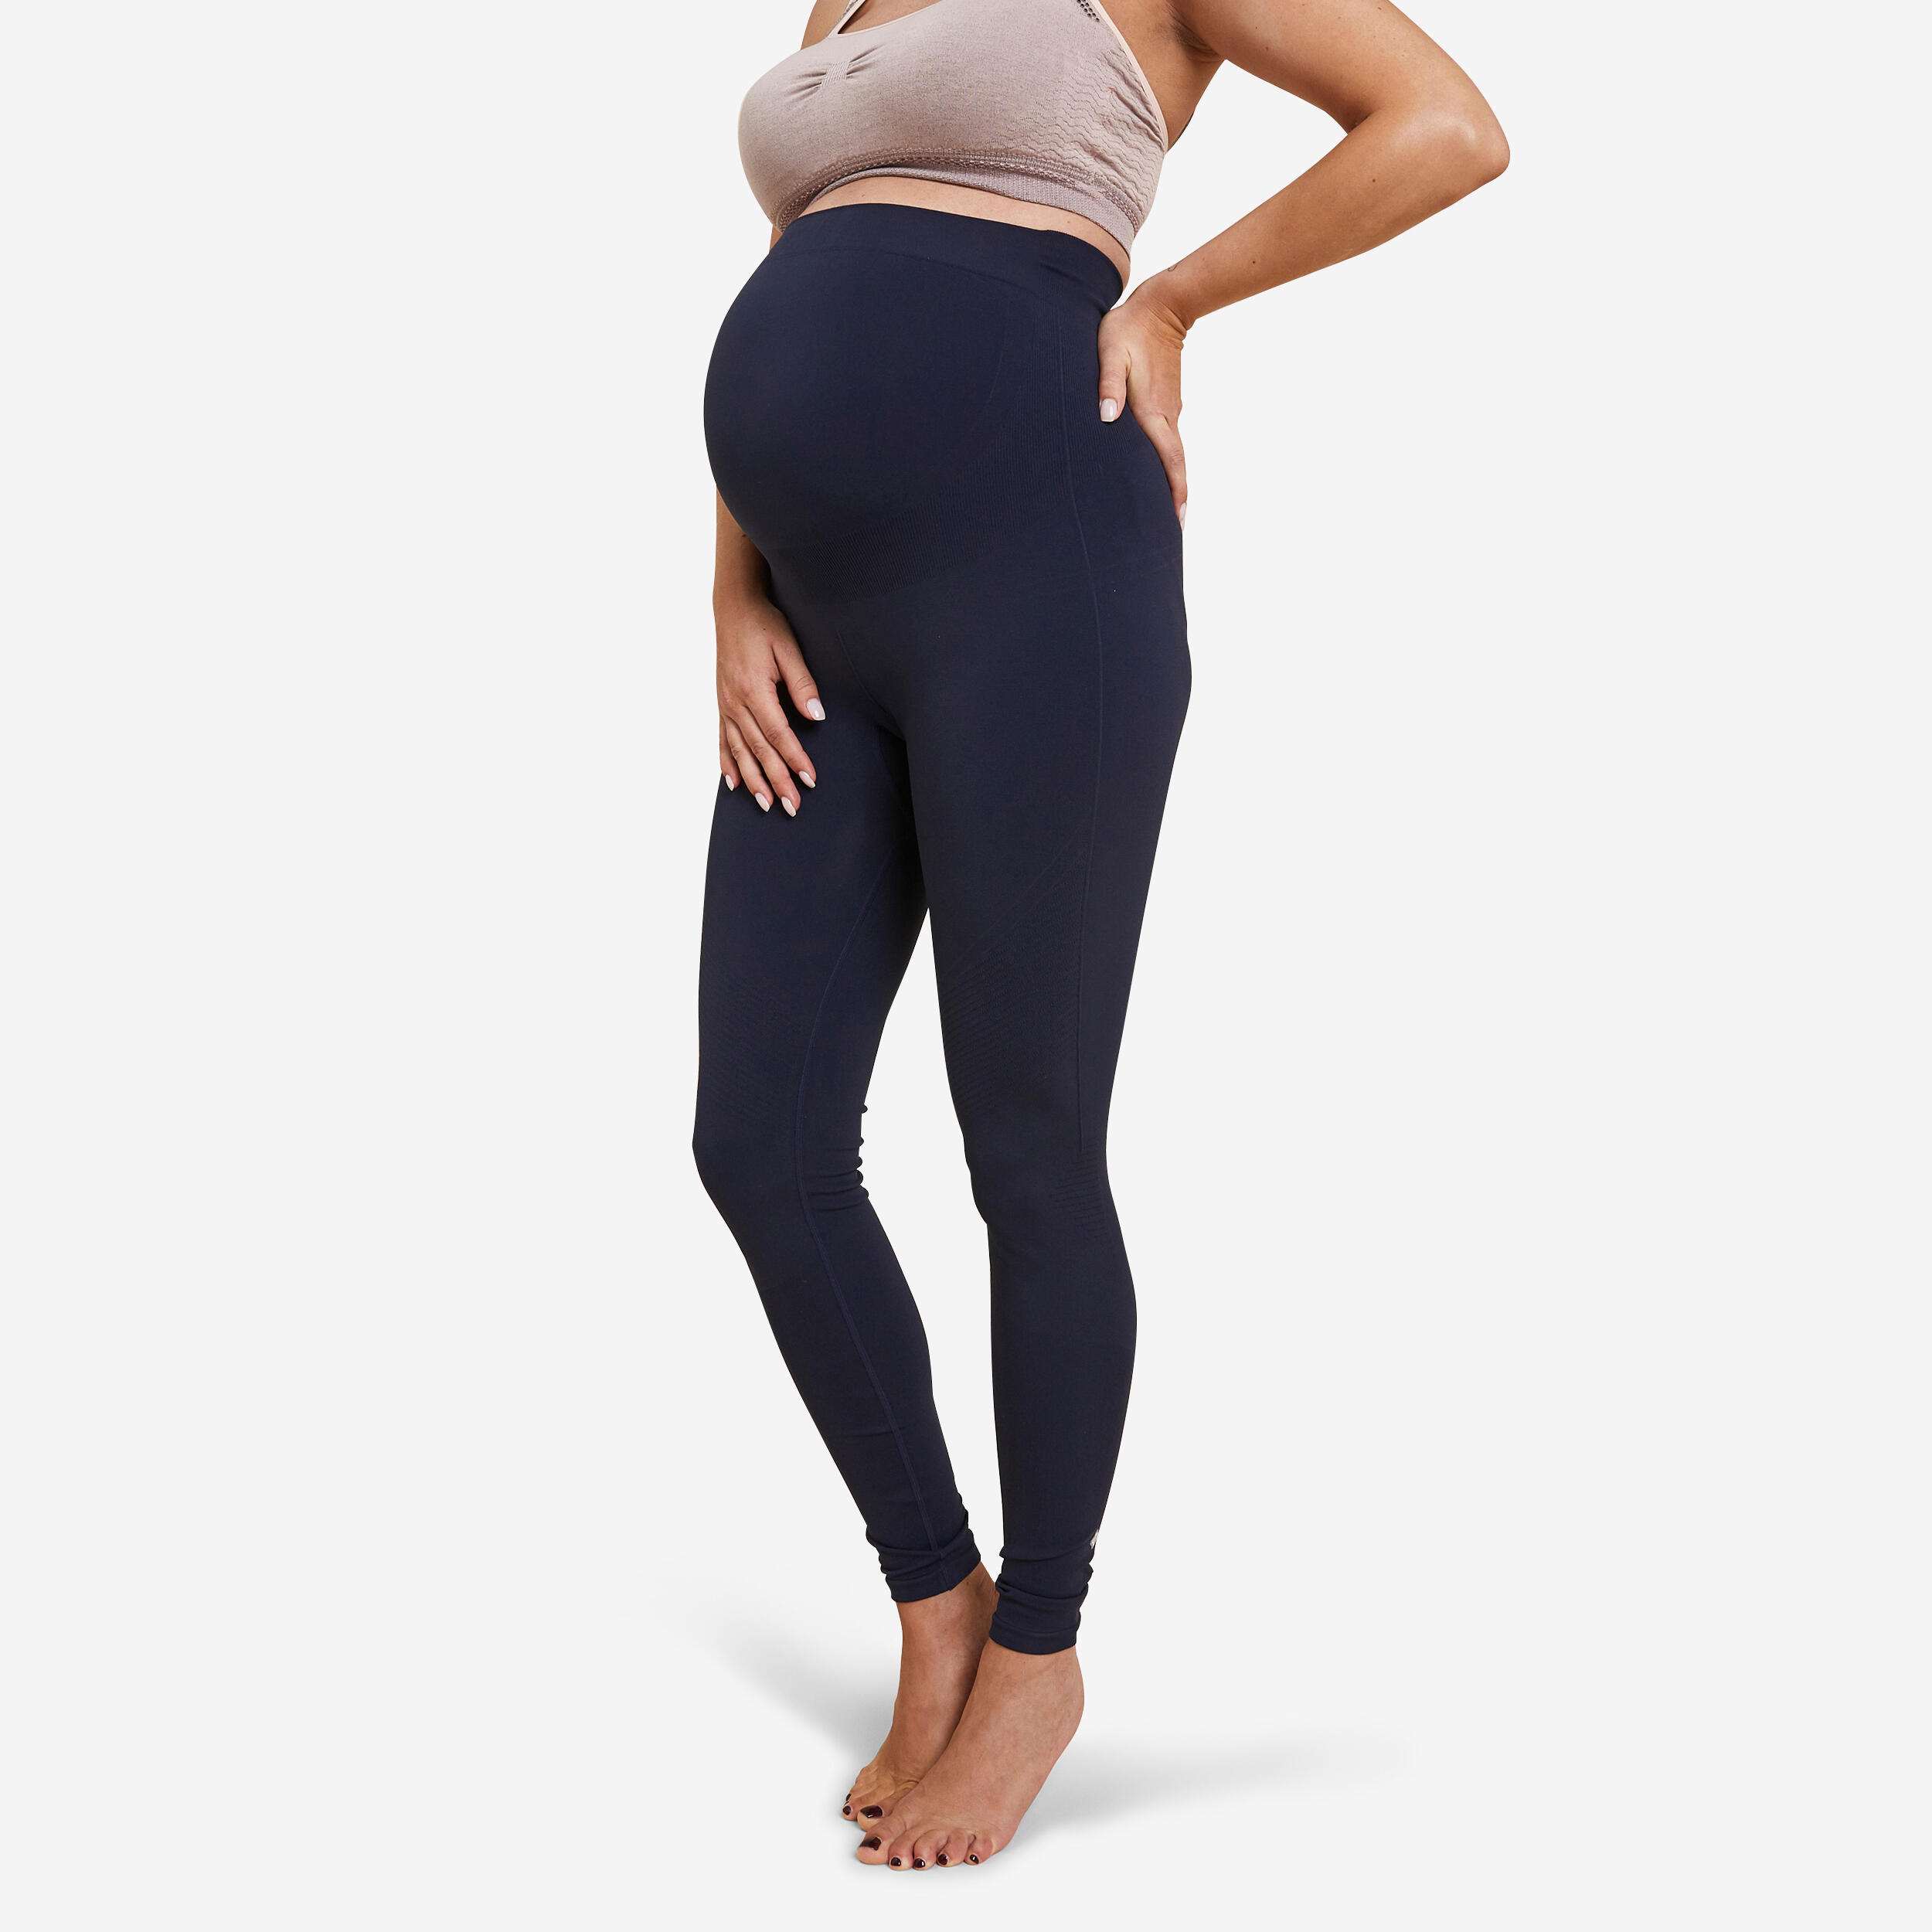 JDEFEG Maternity Yoga Pants for Women Petite Yoga Running Leggings